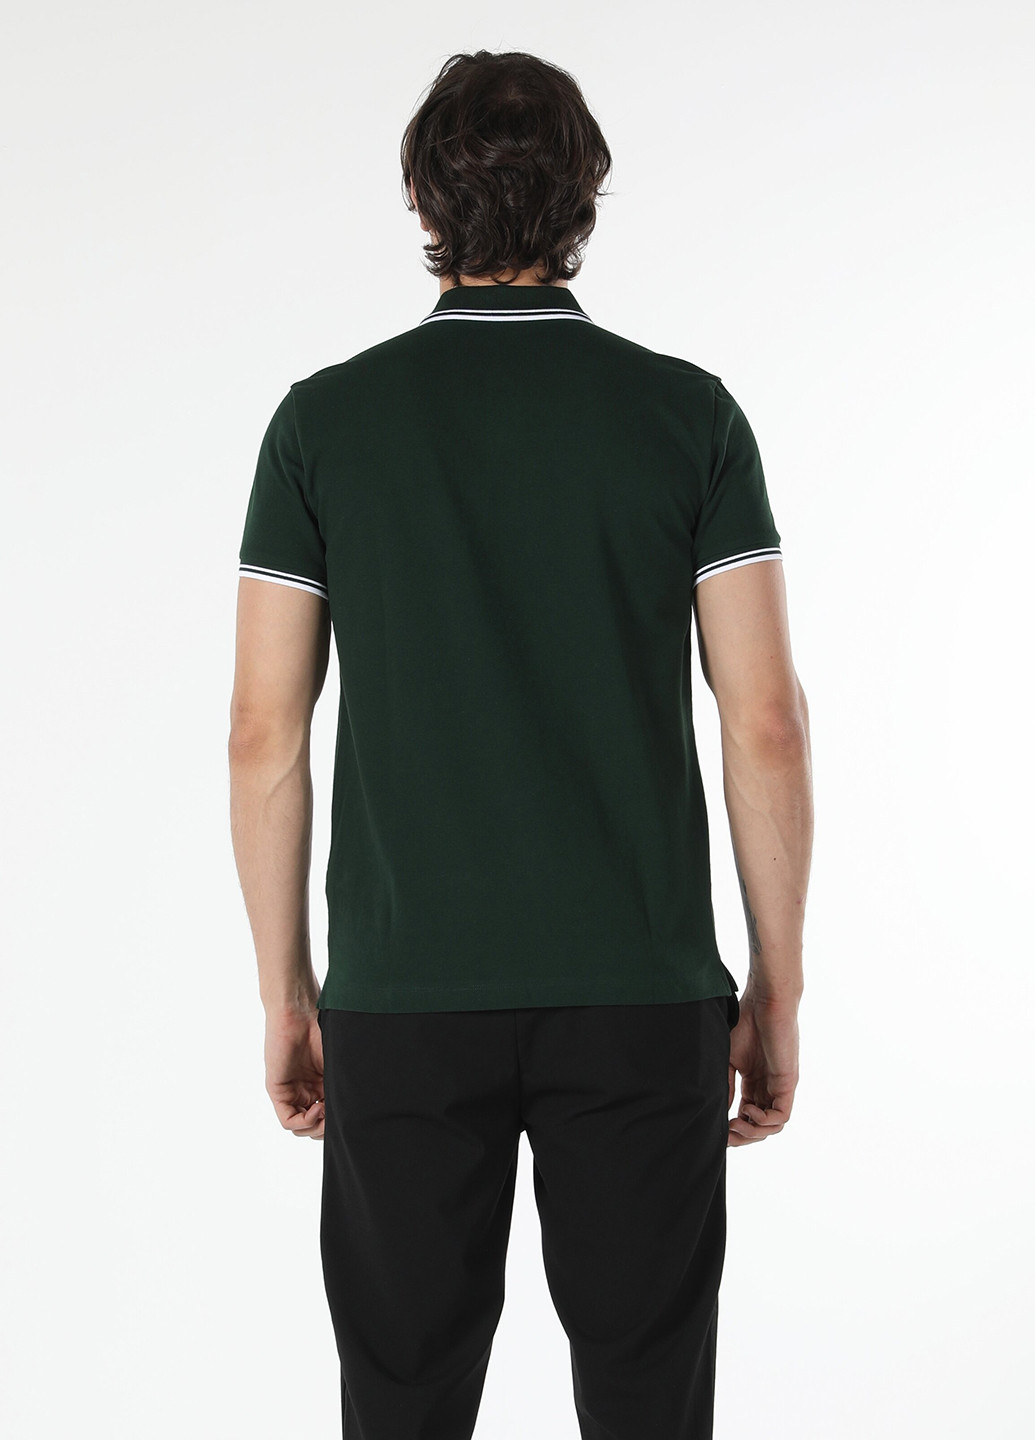 Зеленая футболка-поло для мужчин Colin's однотонная